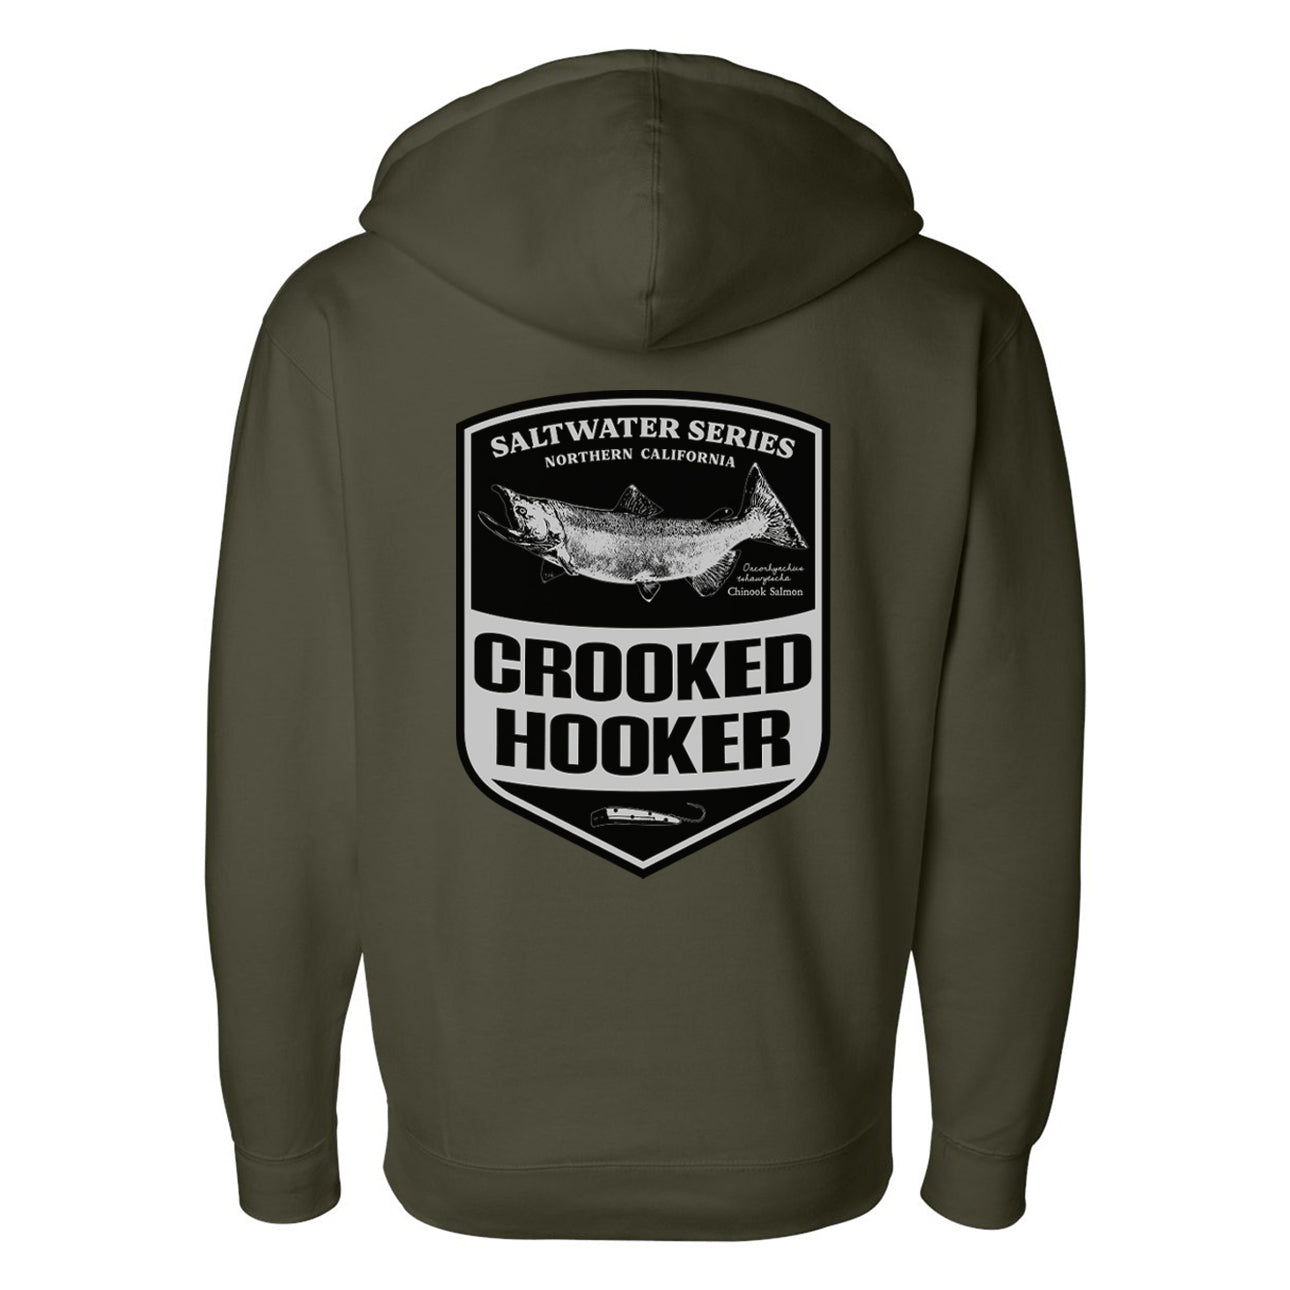 Salmon Badge Premium Hoodie from Crooked Hooker